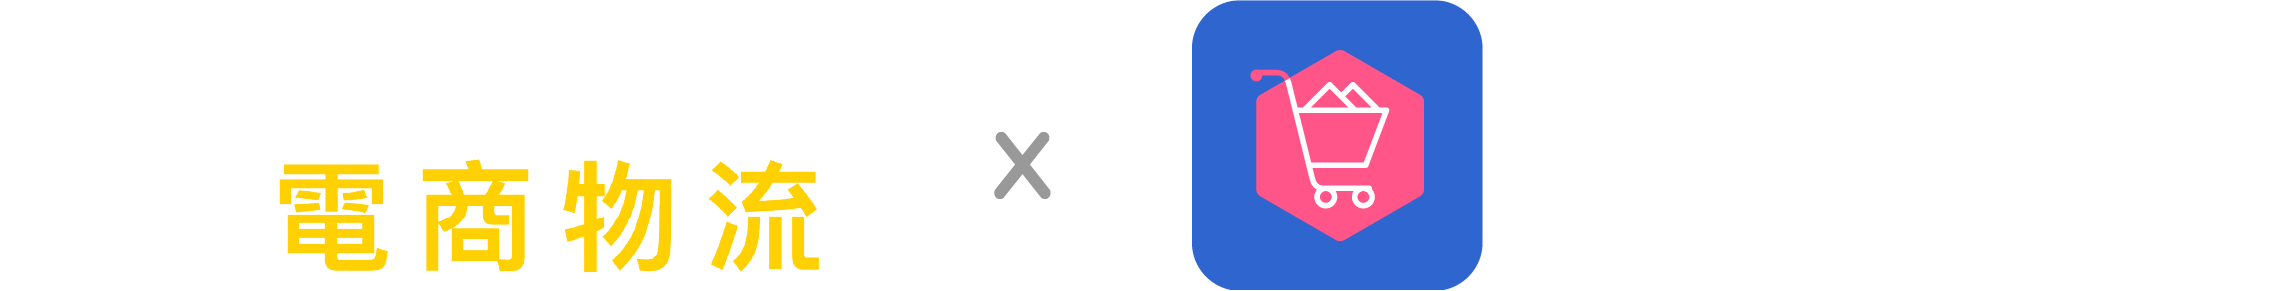 Boxful X Easystore